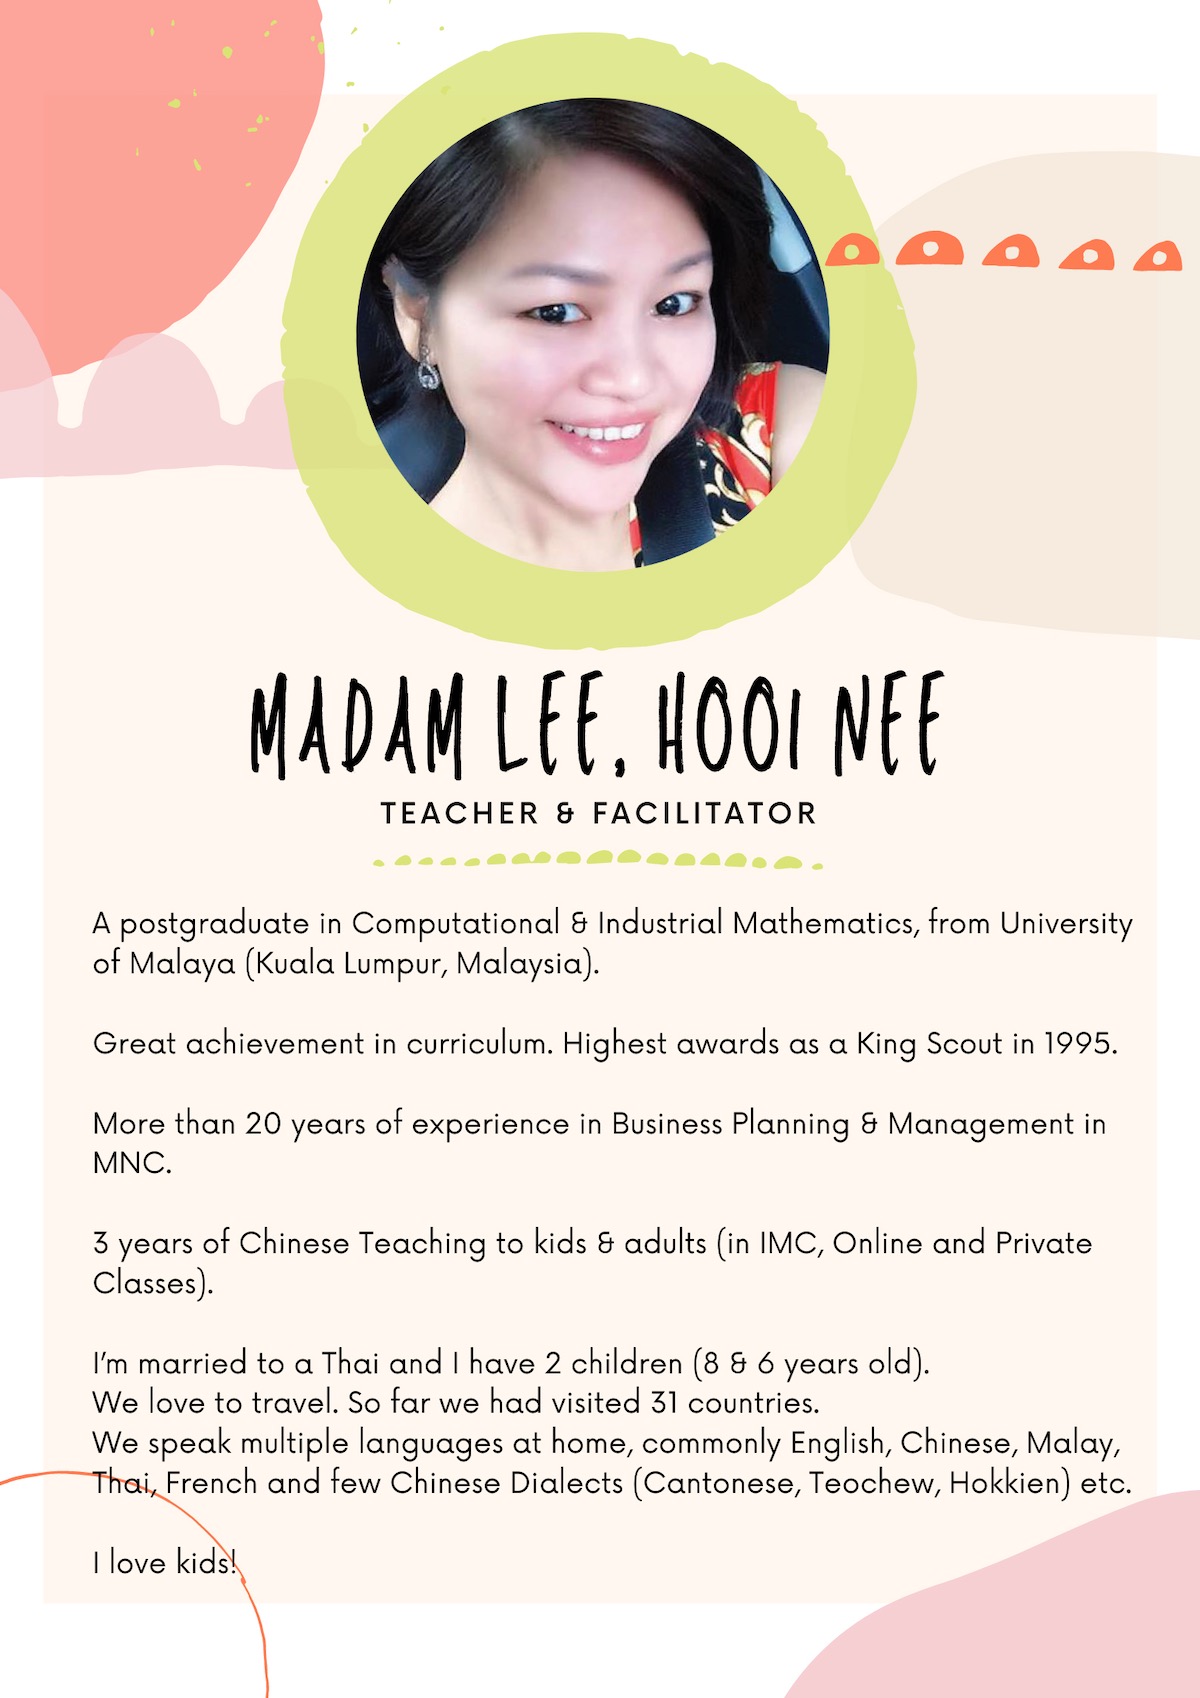 Poster of Madam Lee Hooi Nee